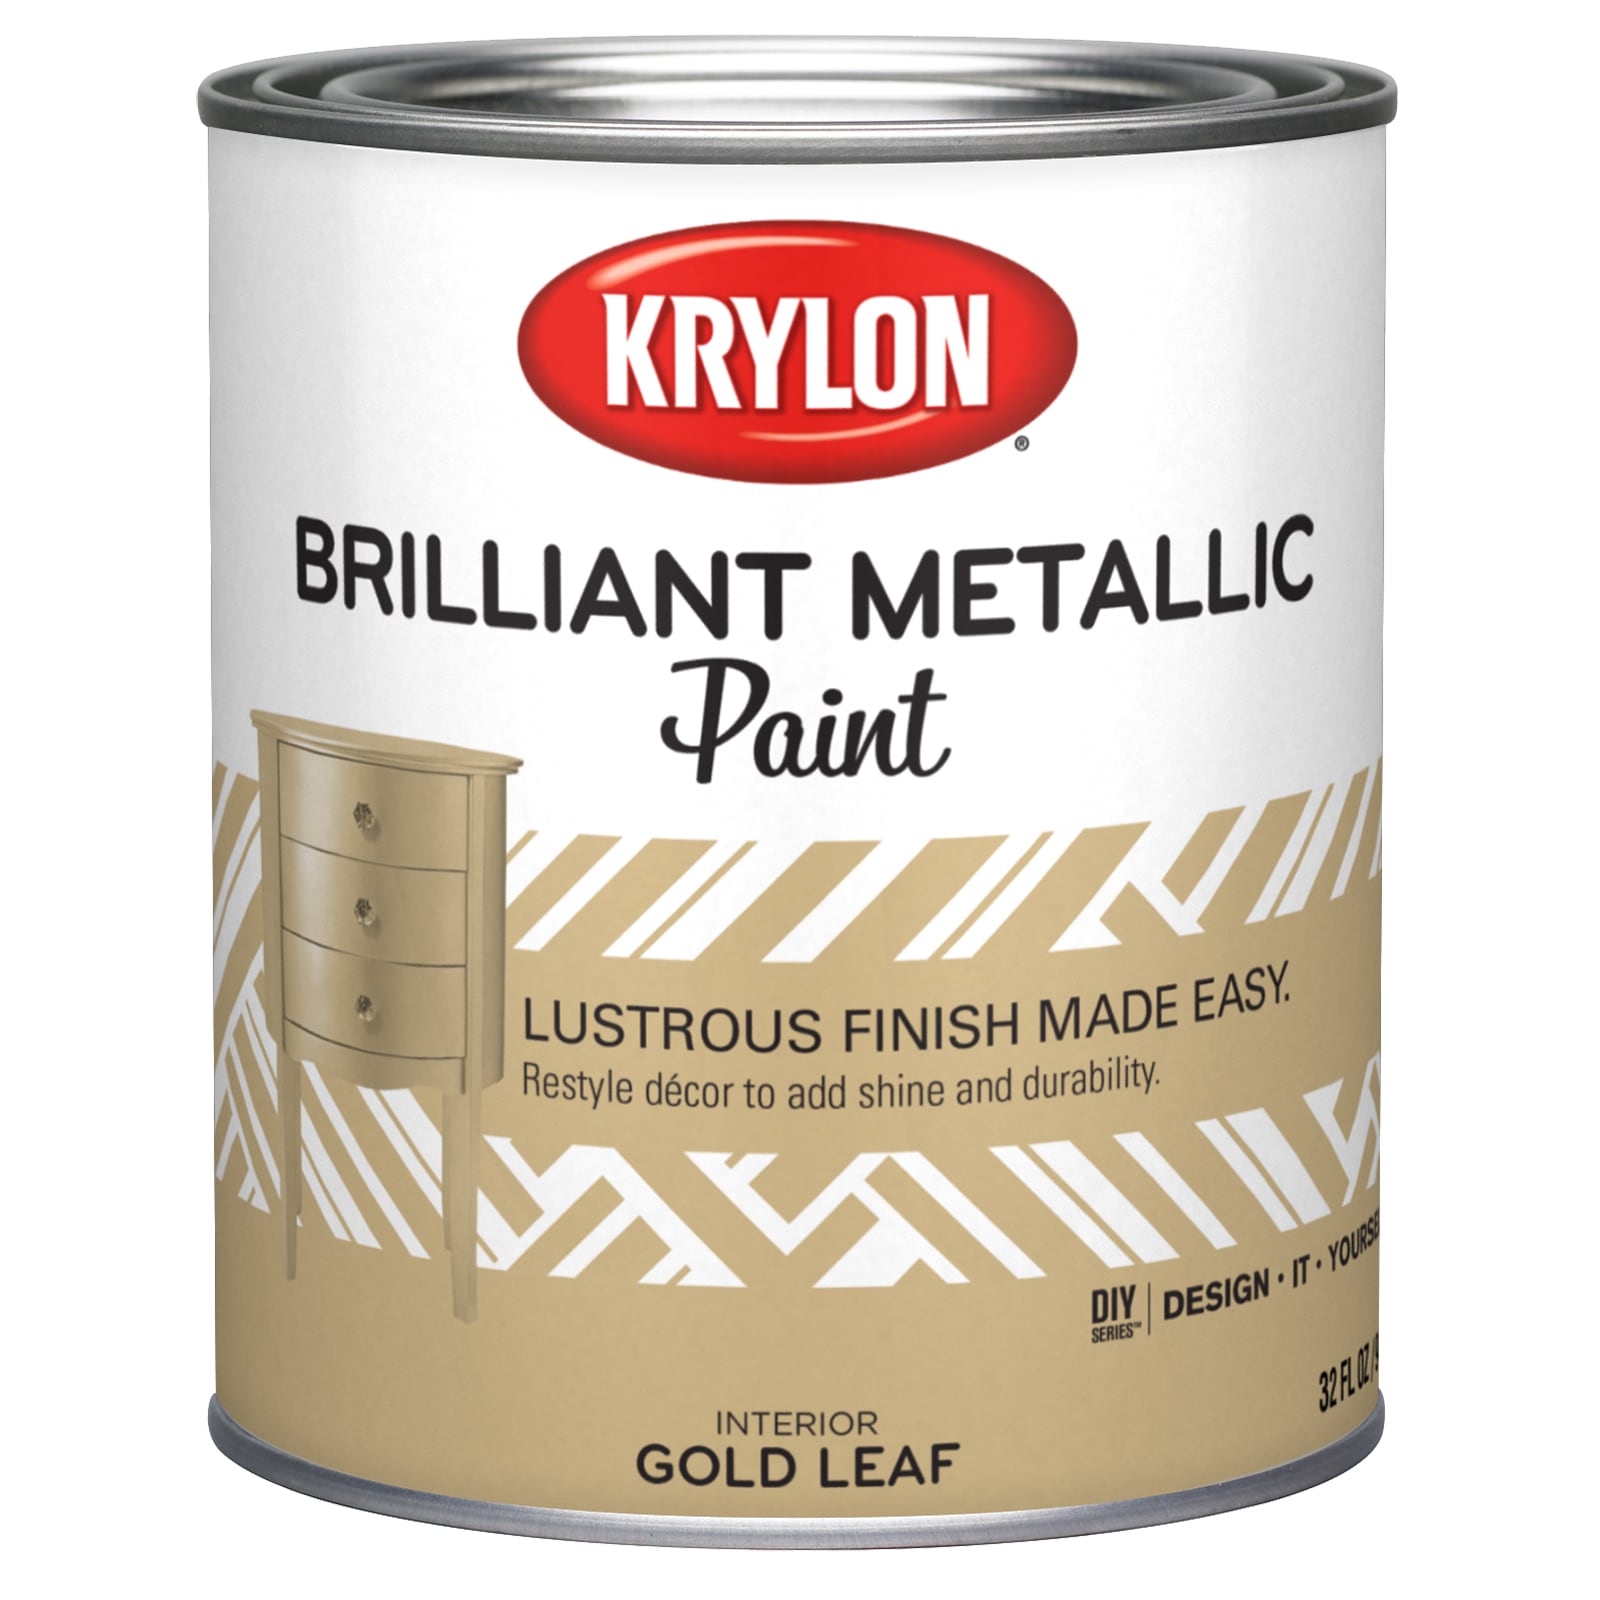 Krylon 11 Oz. Metallic Gloss General Purpose Spray Paint, Gold - McCabe Do  it Center